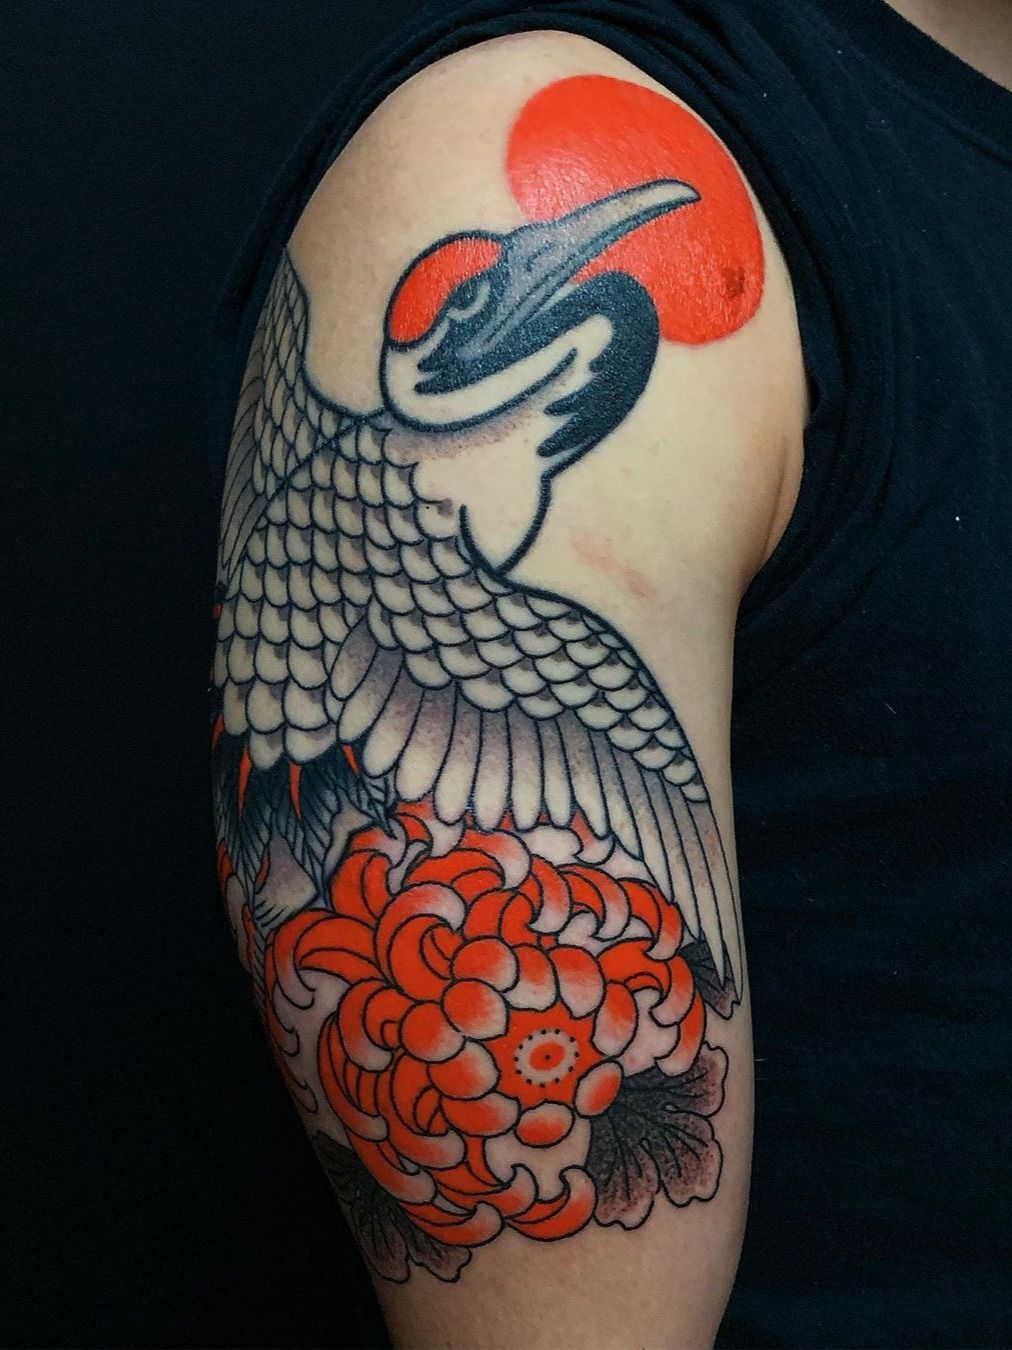 Japanese peacock tattoo.Asian Phoenix fire bird tattoo design.Colorful  Phoenix fire bird colouring book illustration.Hand drawn Japanese tattoo  style. 24186582 Vector Art at Vecteezy